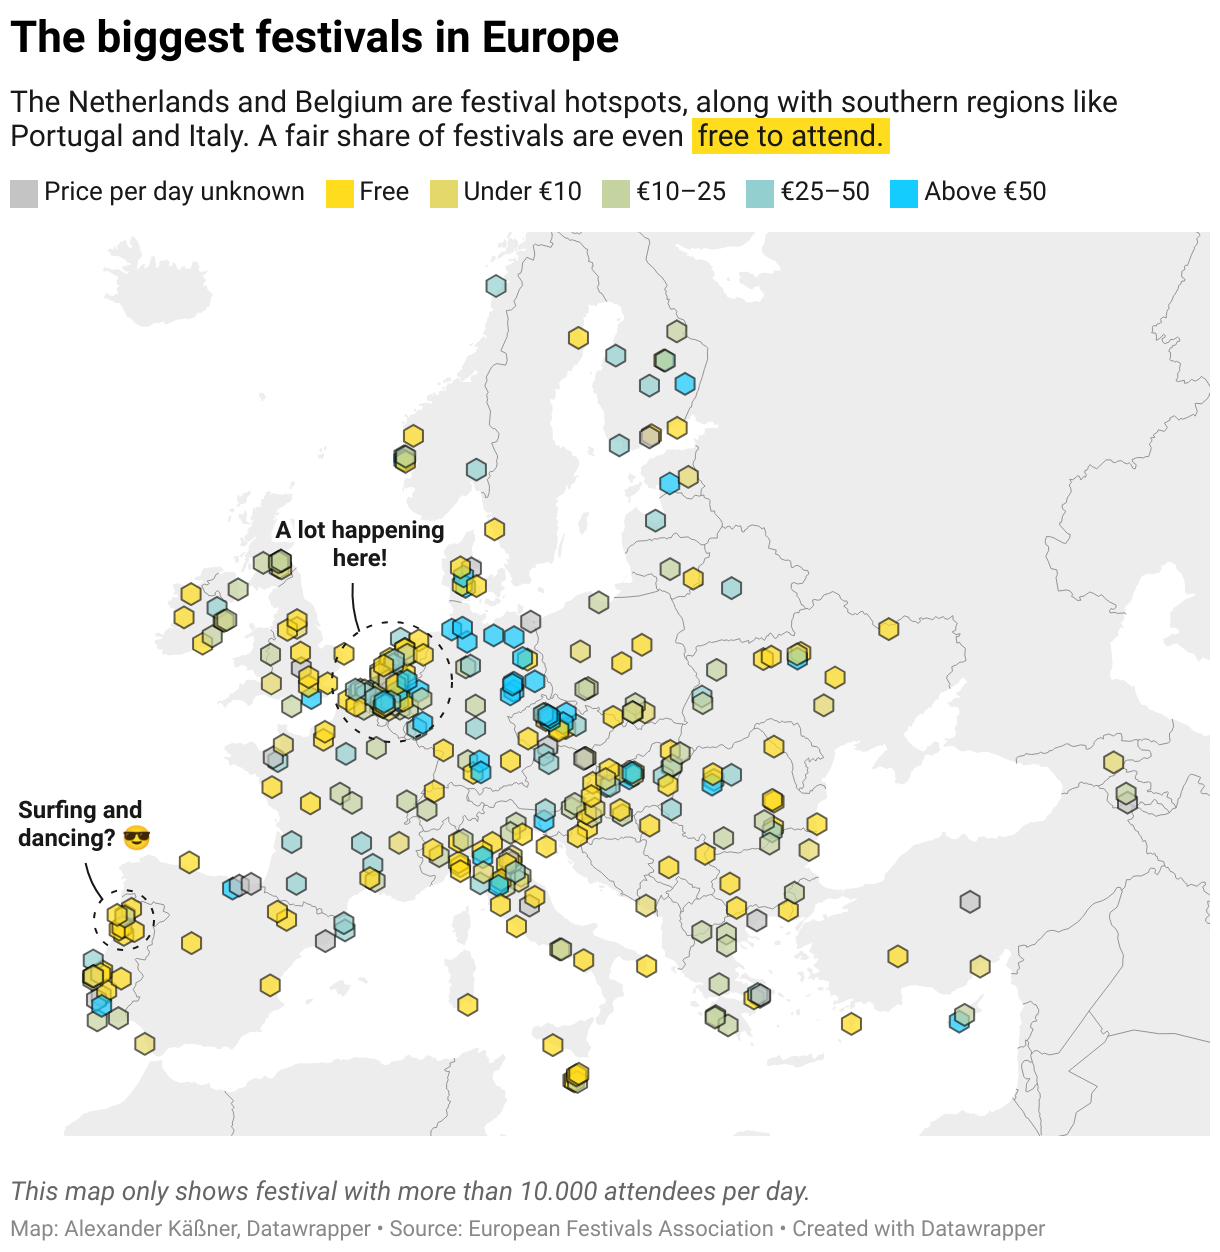 The biggest festivals in Europe